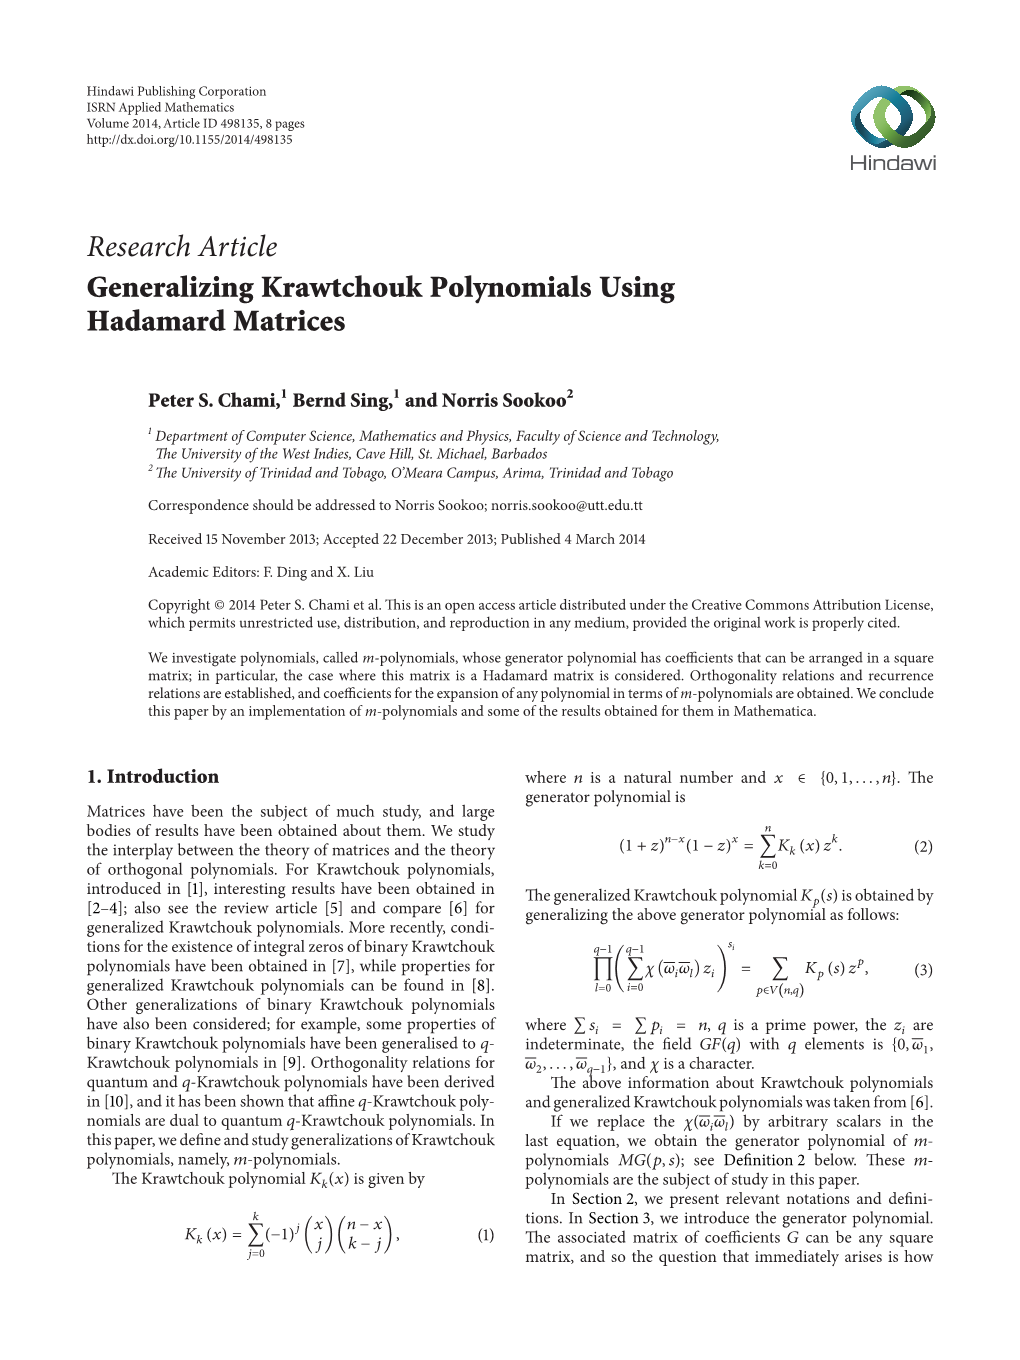 Generalizing Krawtchouk Polynomials Using Hadamard Matrices